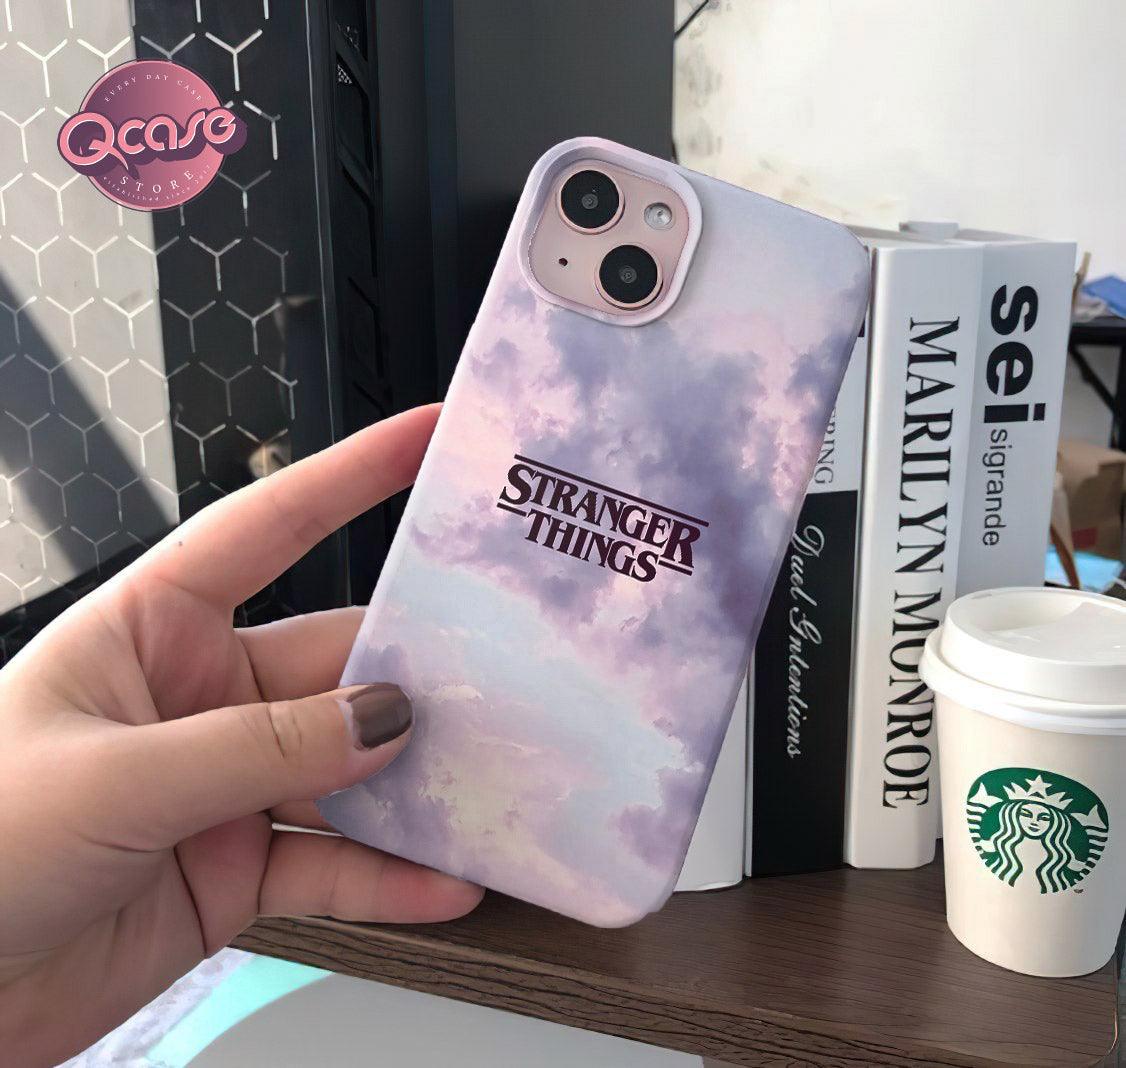 Sky Stranger Things Phone Cover - Qcase Store | Everyday Case